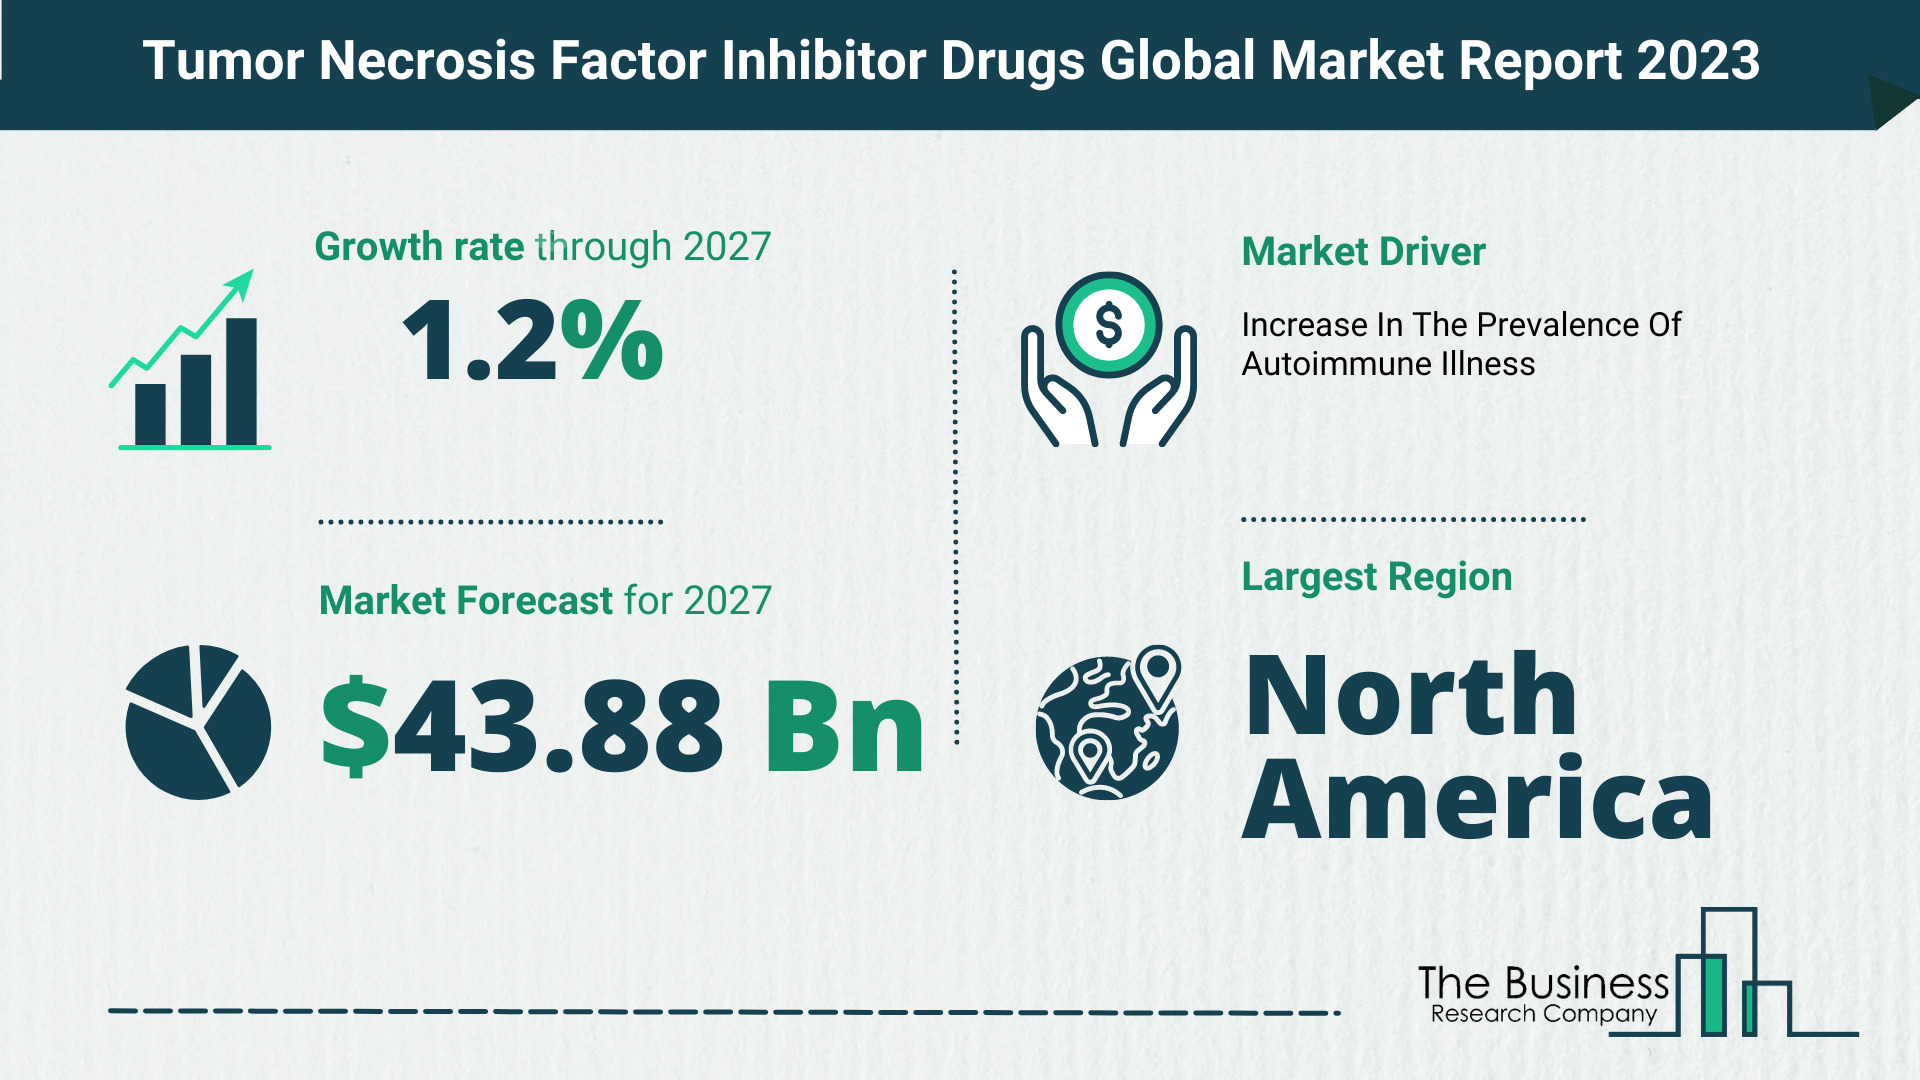 Global Tumor Necrosis Factor Inhibitor Drugs Market